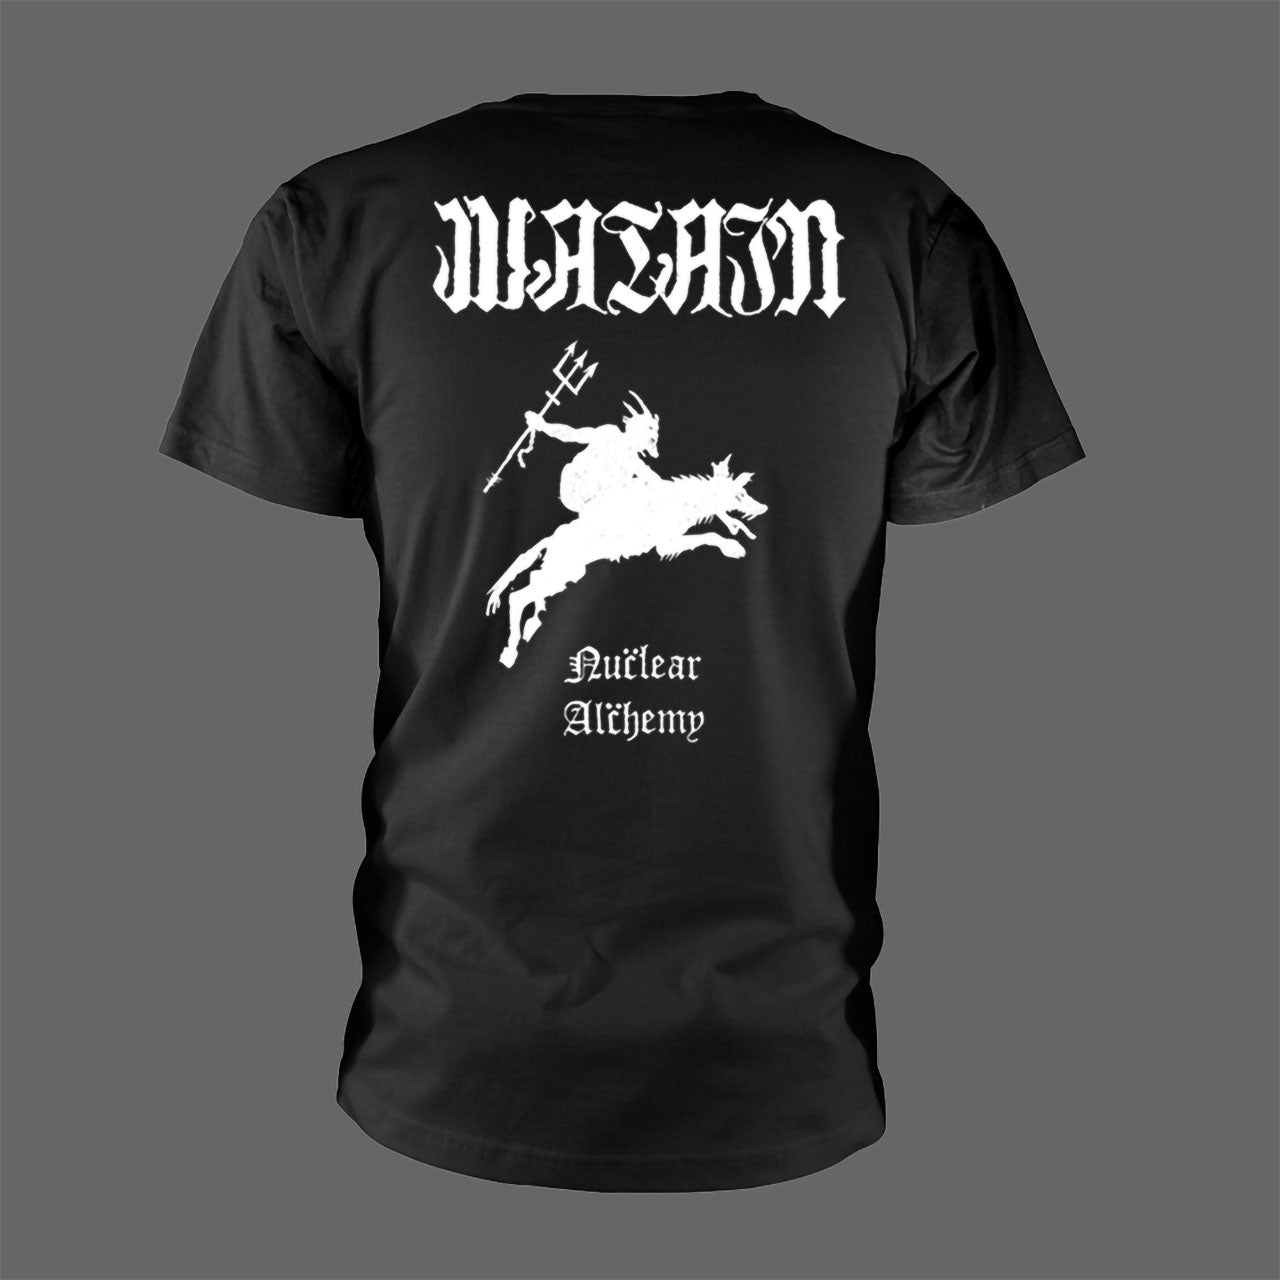 Watain - Swedish Black Metal Violence / Nuclear Alchemy (T-Shirt)